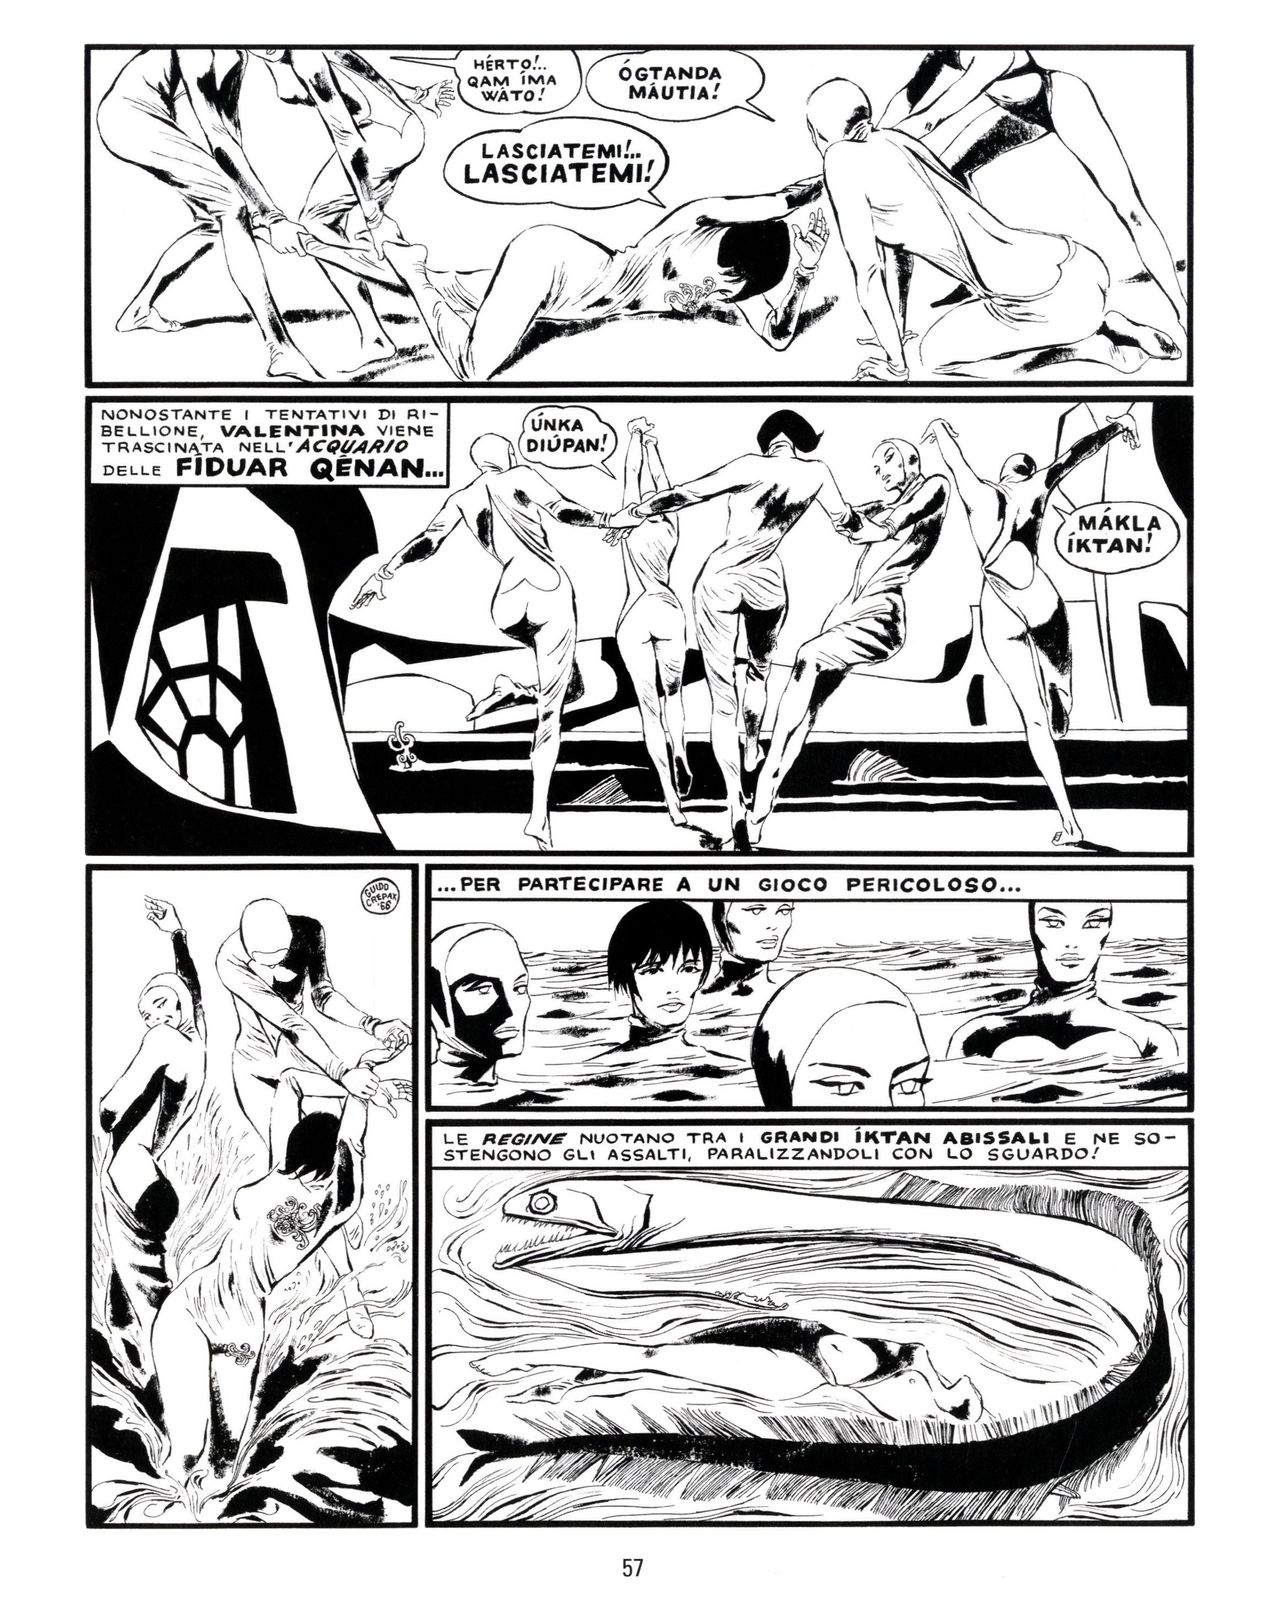 [Guido Crepax] Erotica Fumetti #25 : L'ascesa dei sotterranei : I cavalieri ciechi [Italian] 58